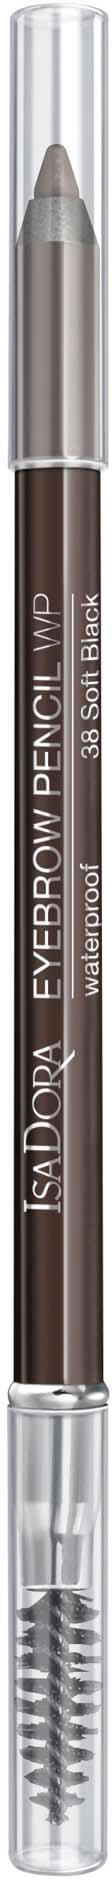 IsaDora Eyebrow Pencil Waterproof Soft Black 38 1.2g